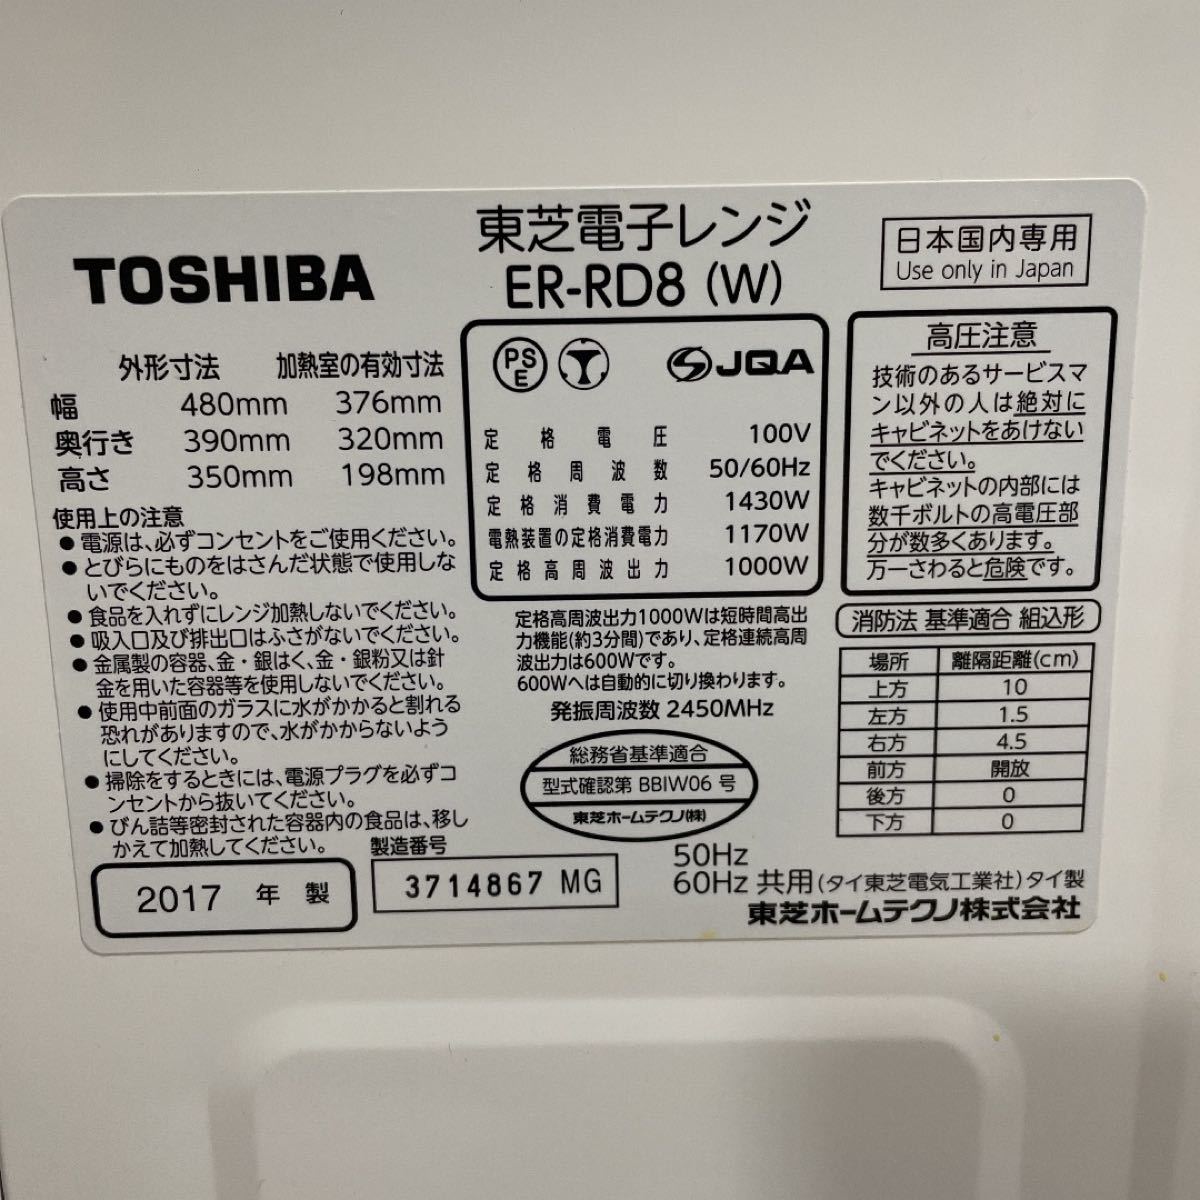 TOSHIBA ER-RD8(W)